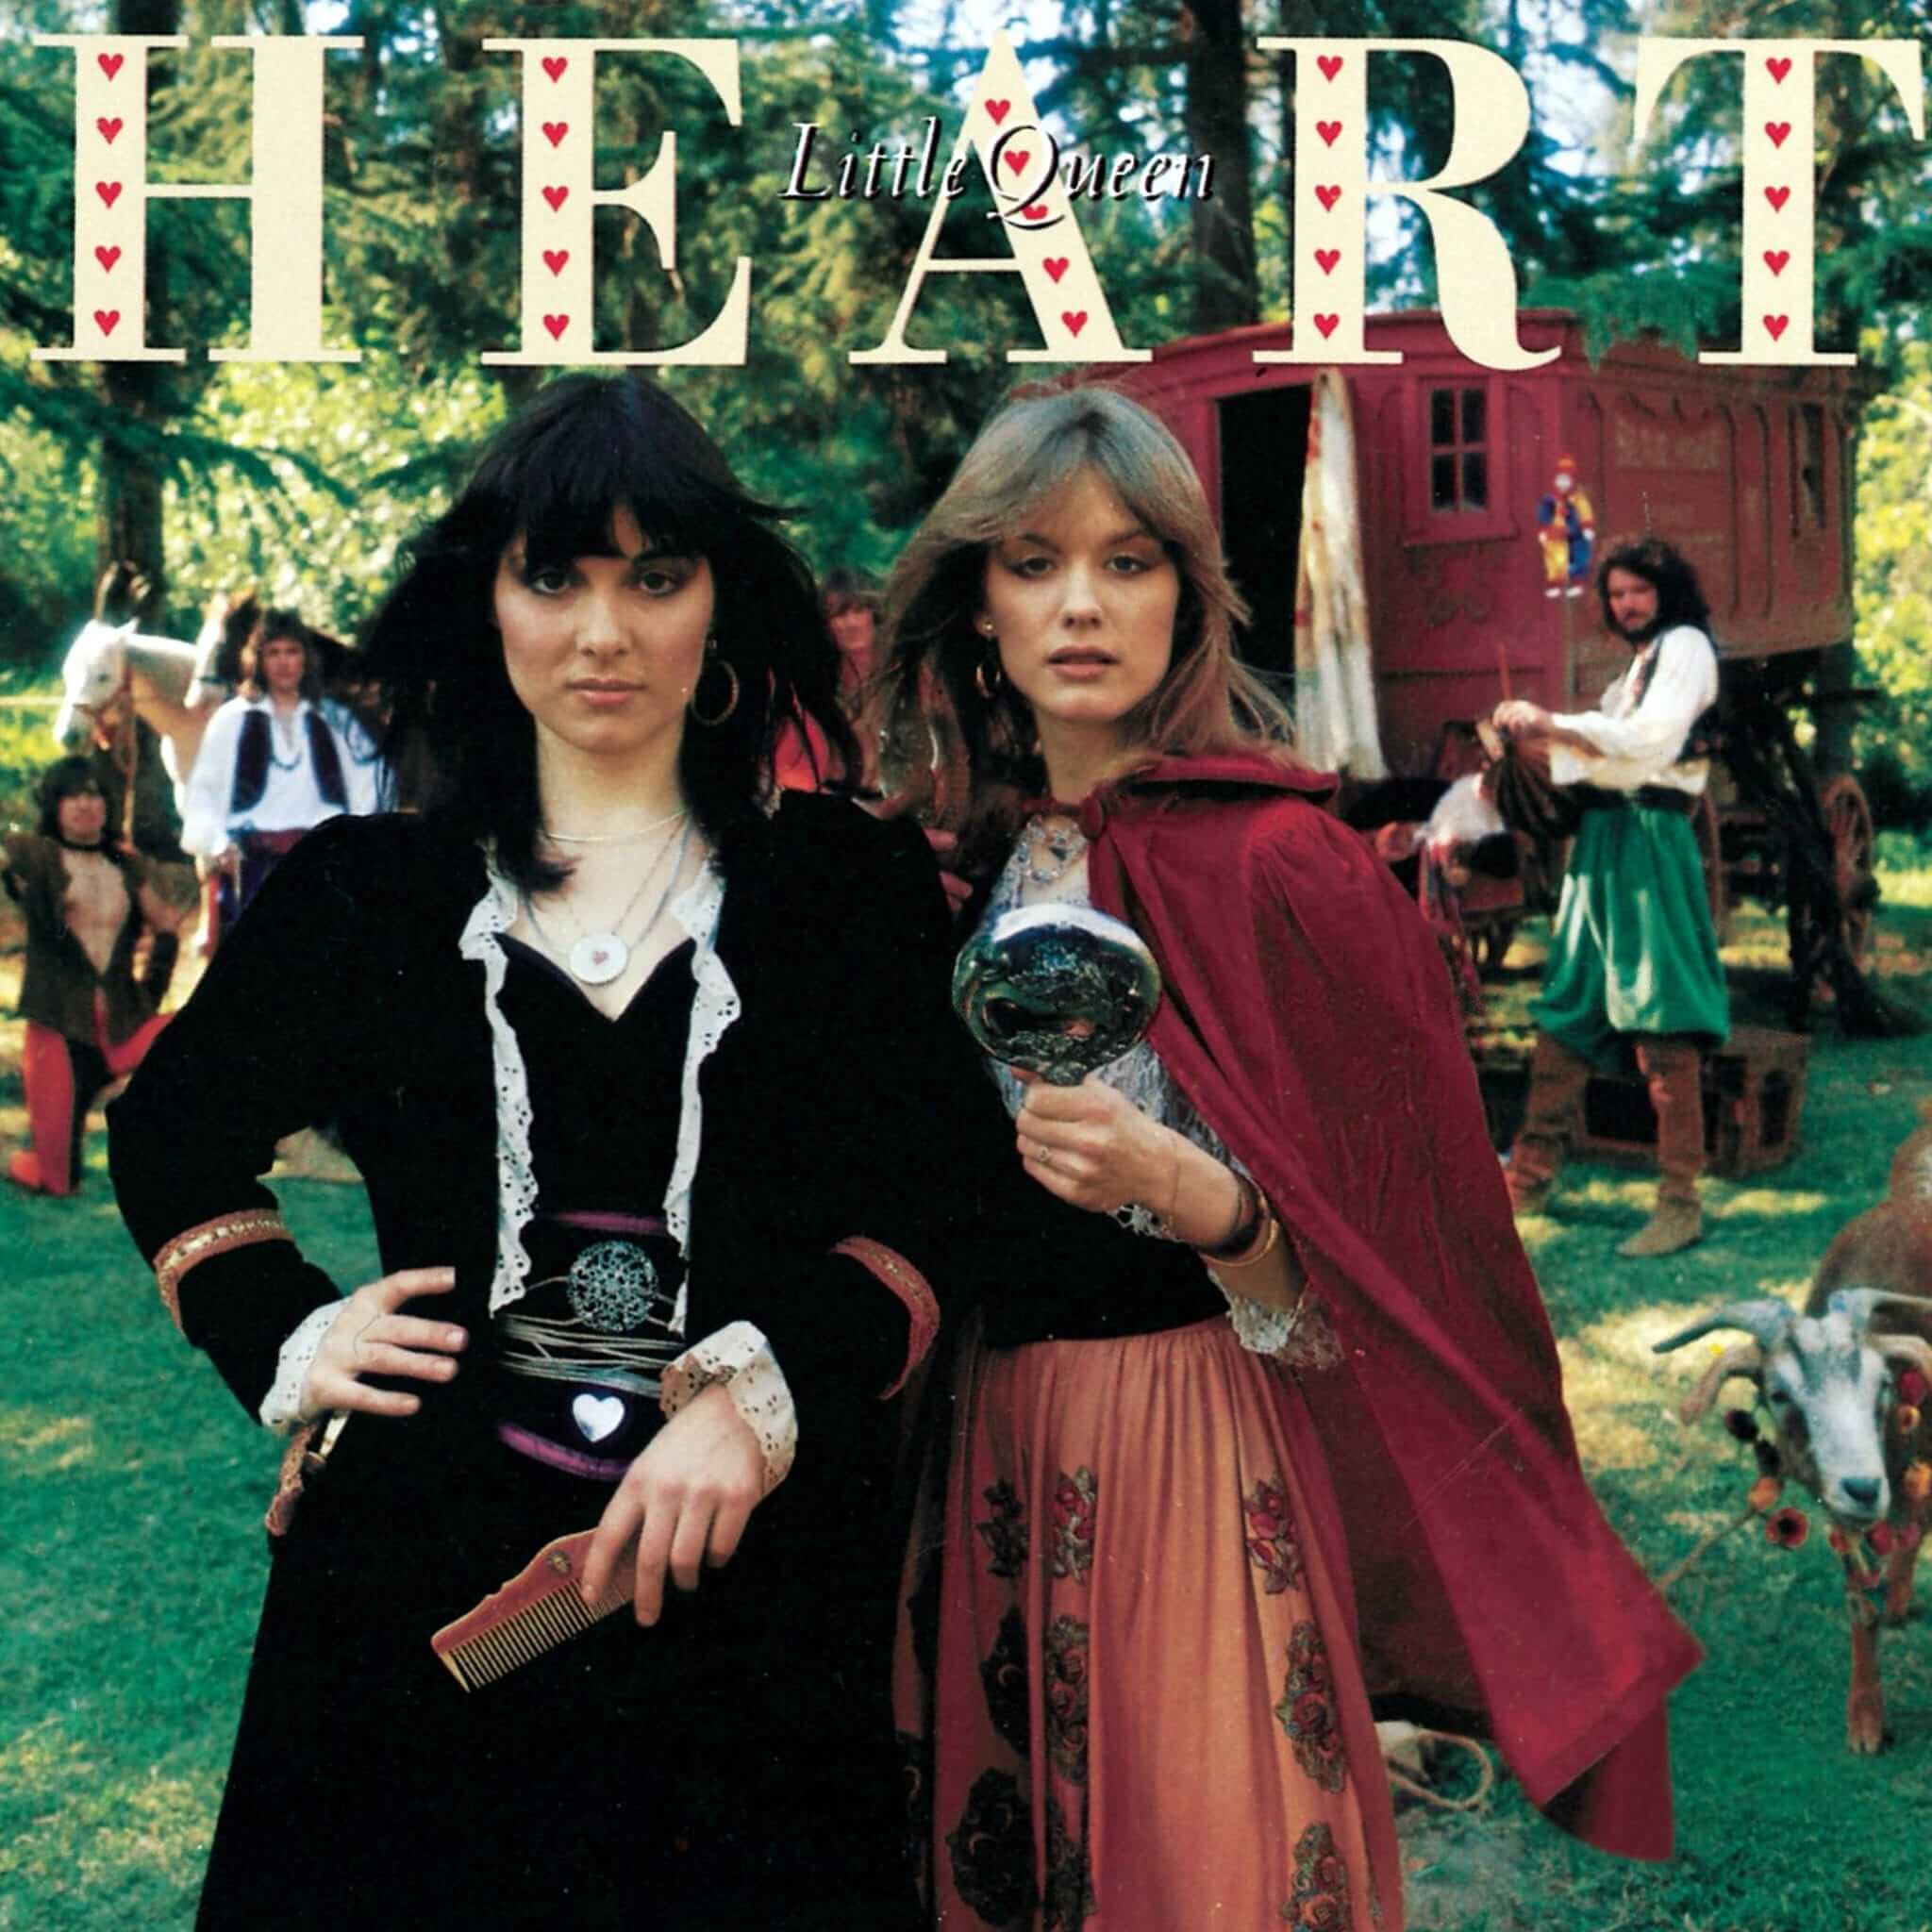 Ann Wilson (left) in Heart's "Little Queen" 1977 